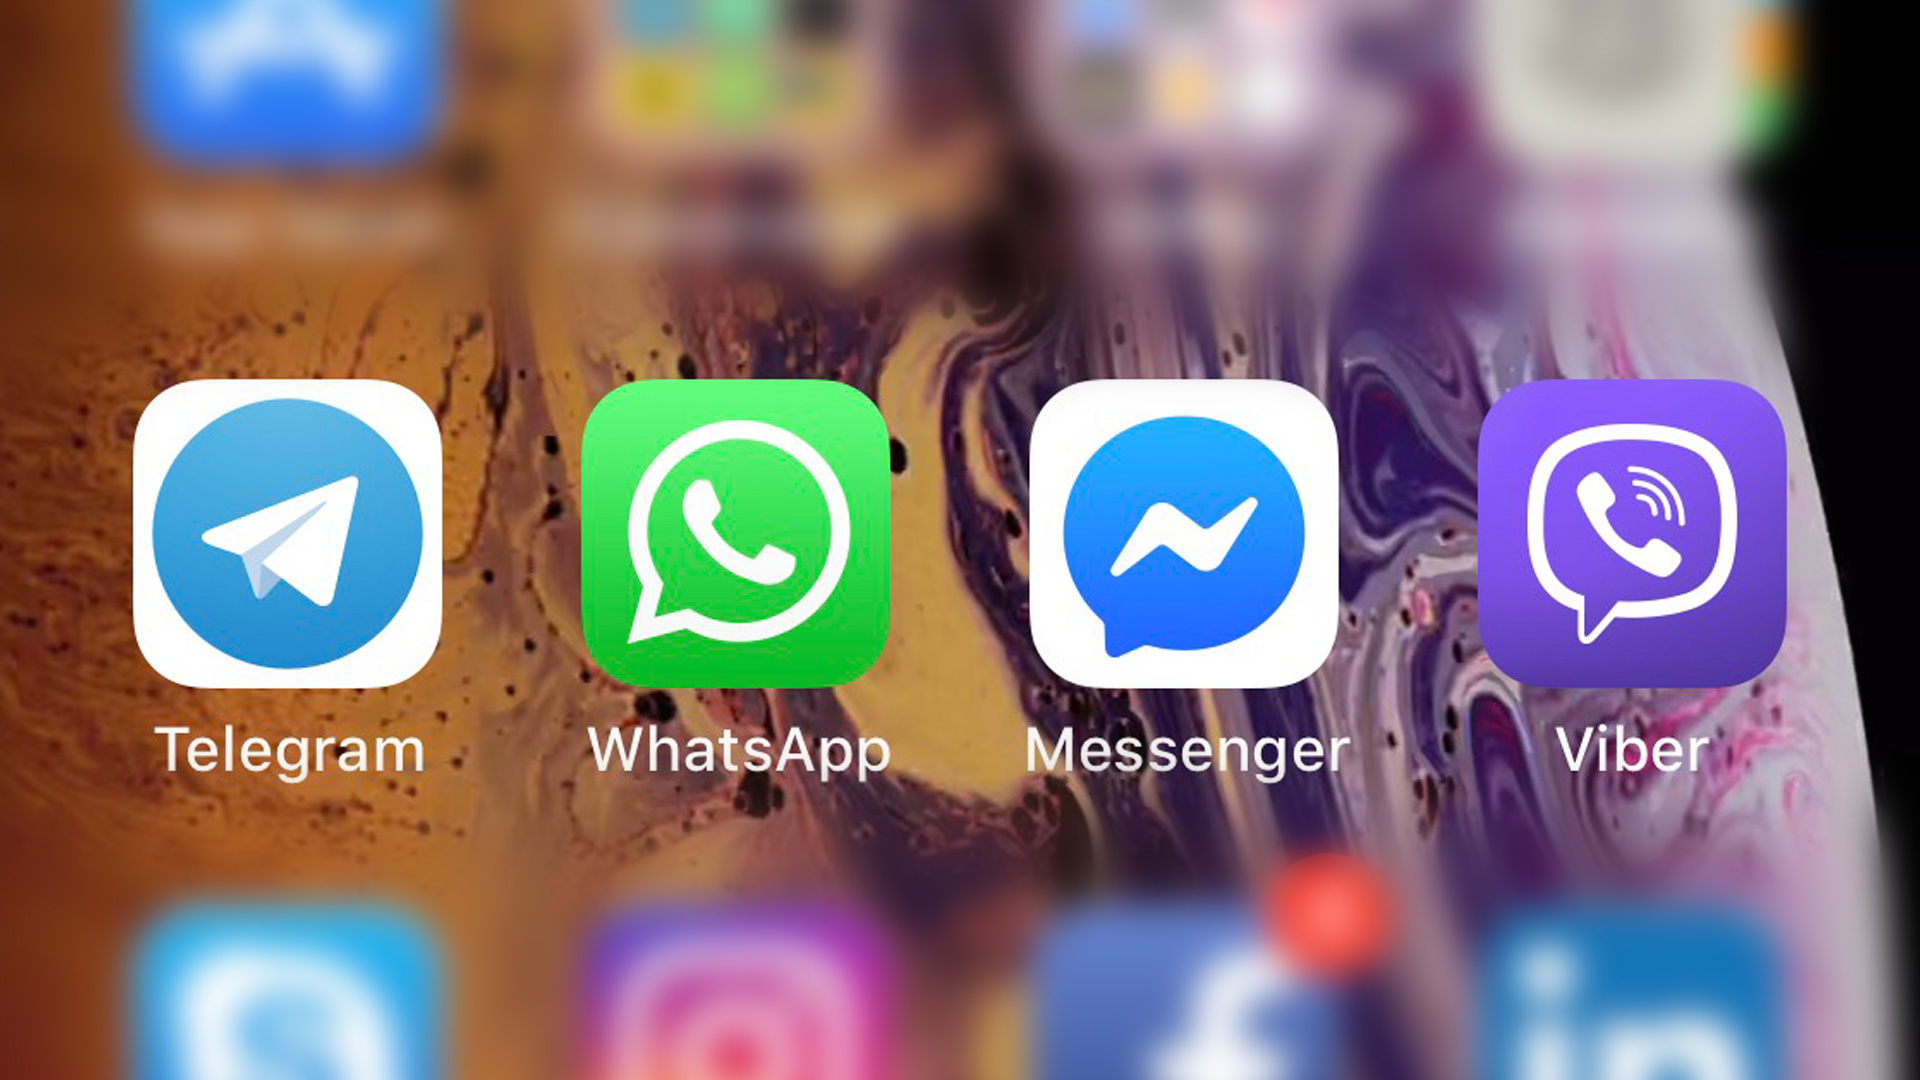 whatsapp vs telegram security